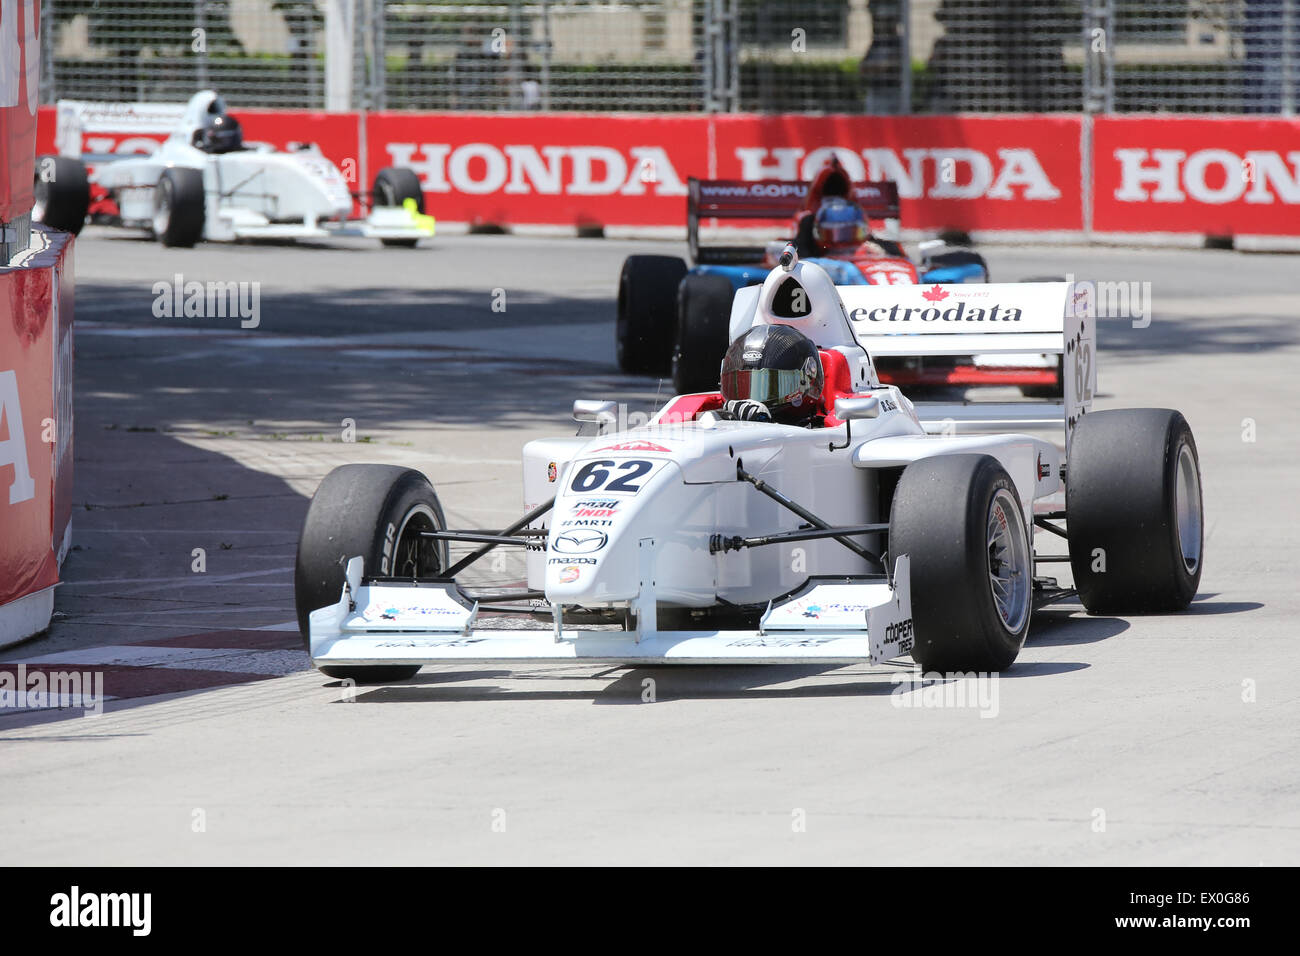 Honda Indy Toronto car racing event Foto Stock